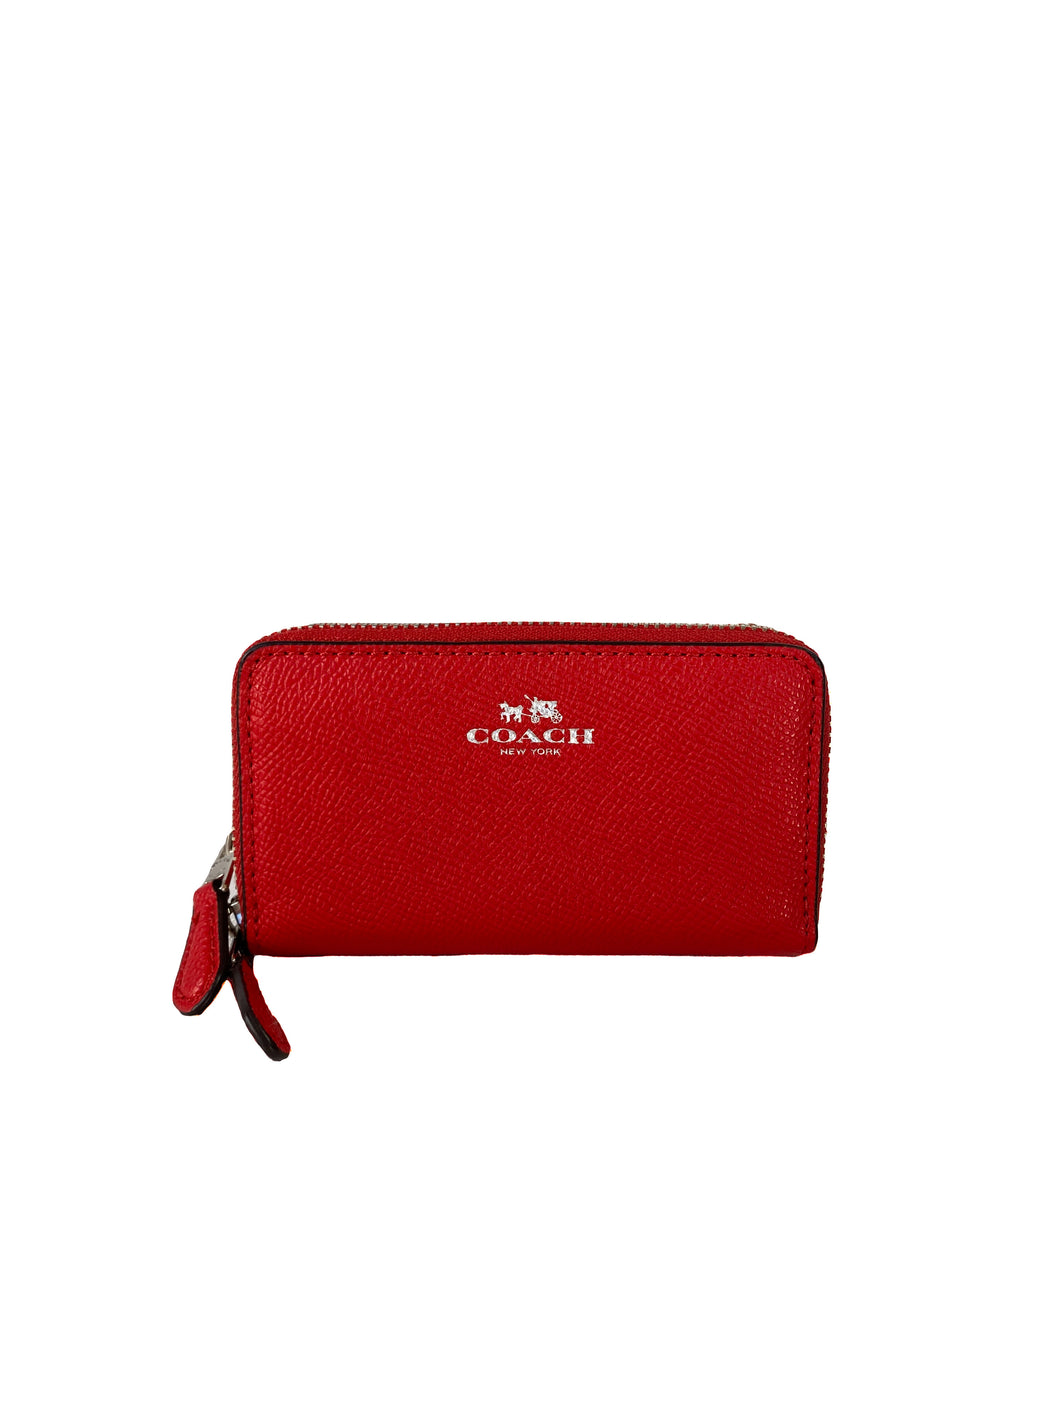 Coach red double zip wallet NWT – My Girlfriend's Wardrobe LLC